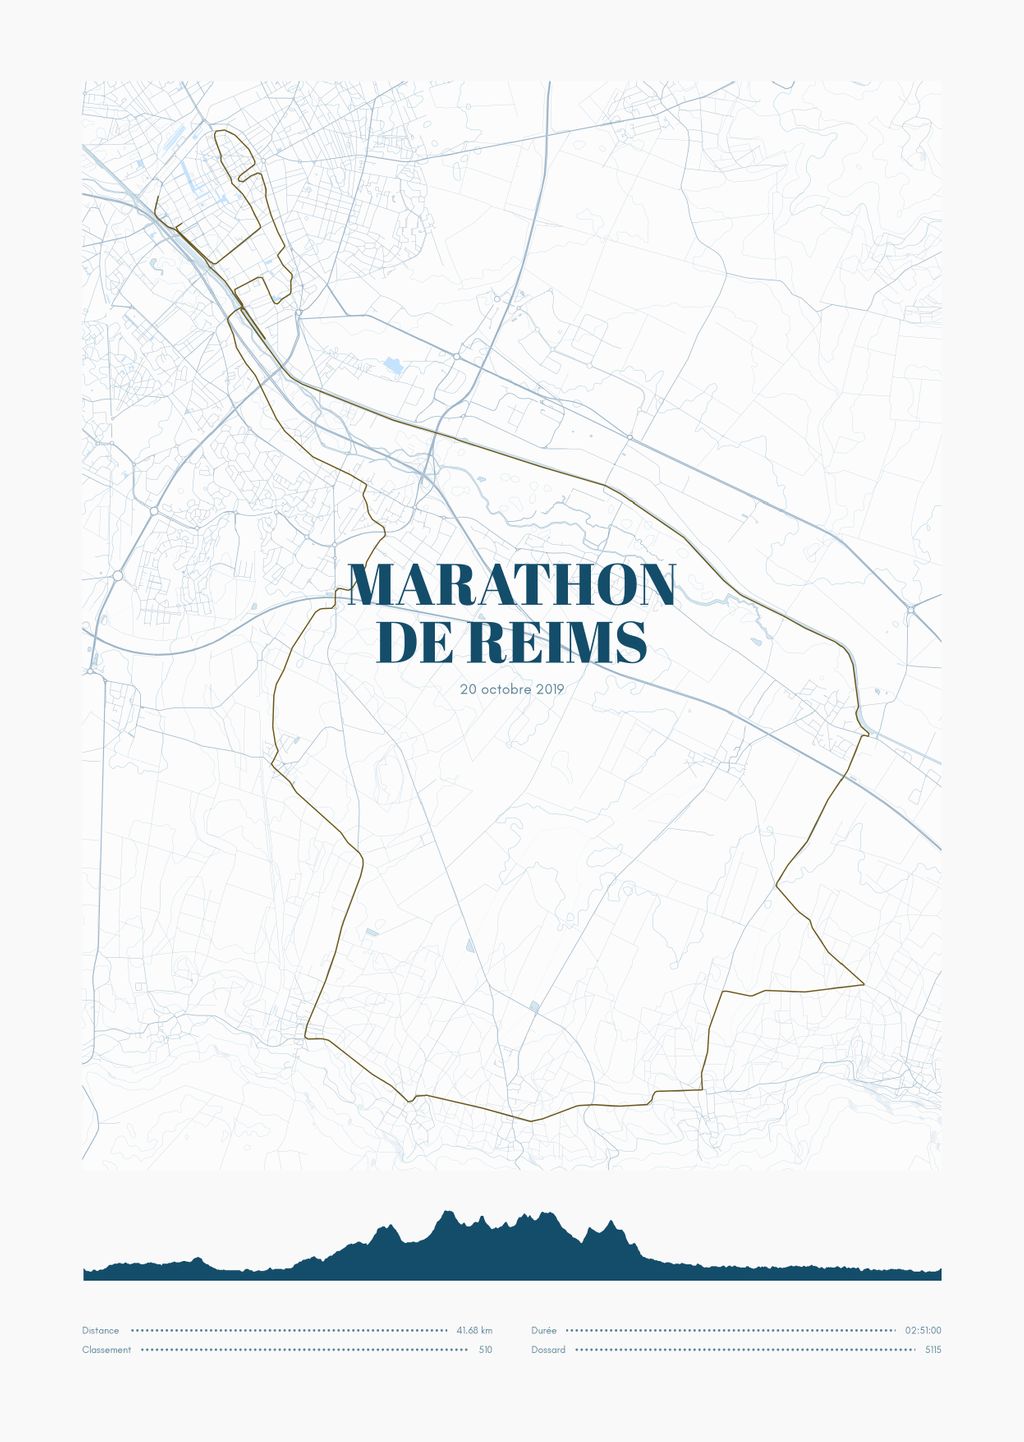 Map poster of the Marathon 
de Reims